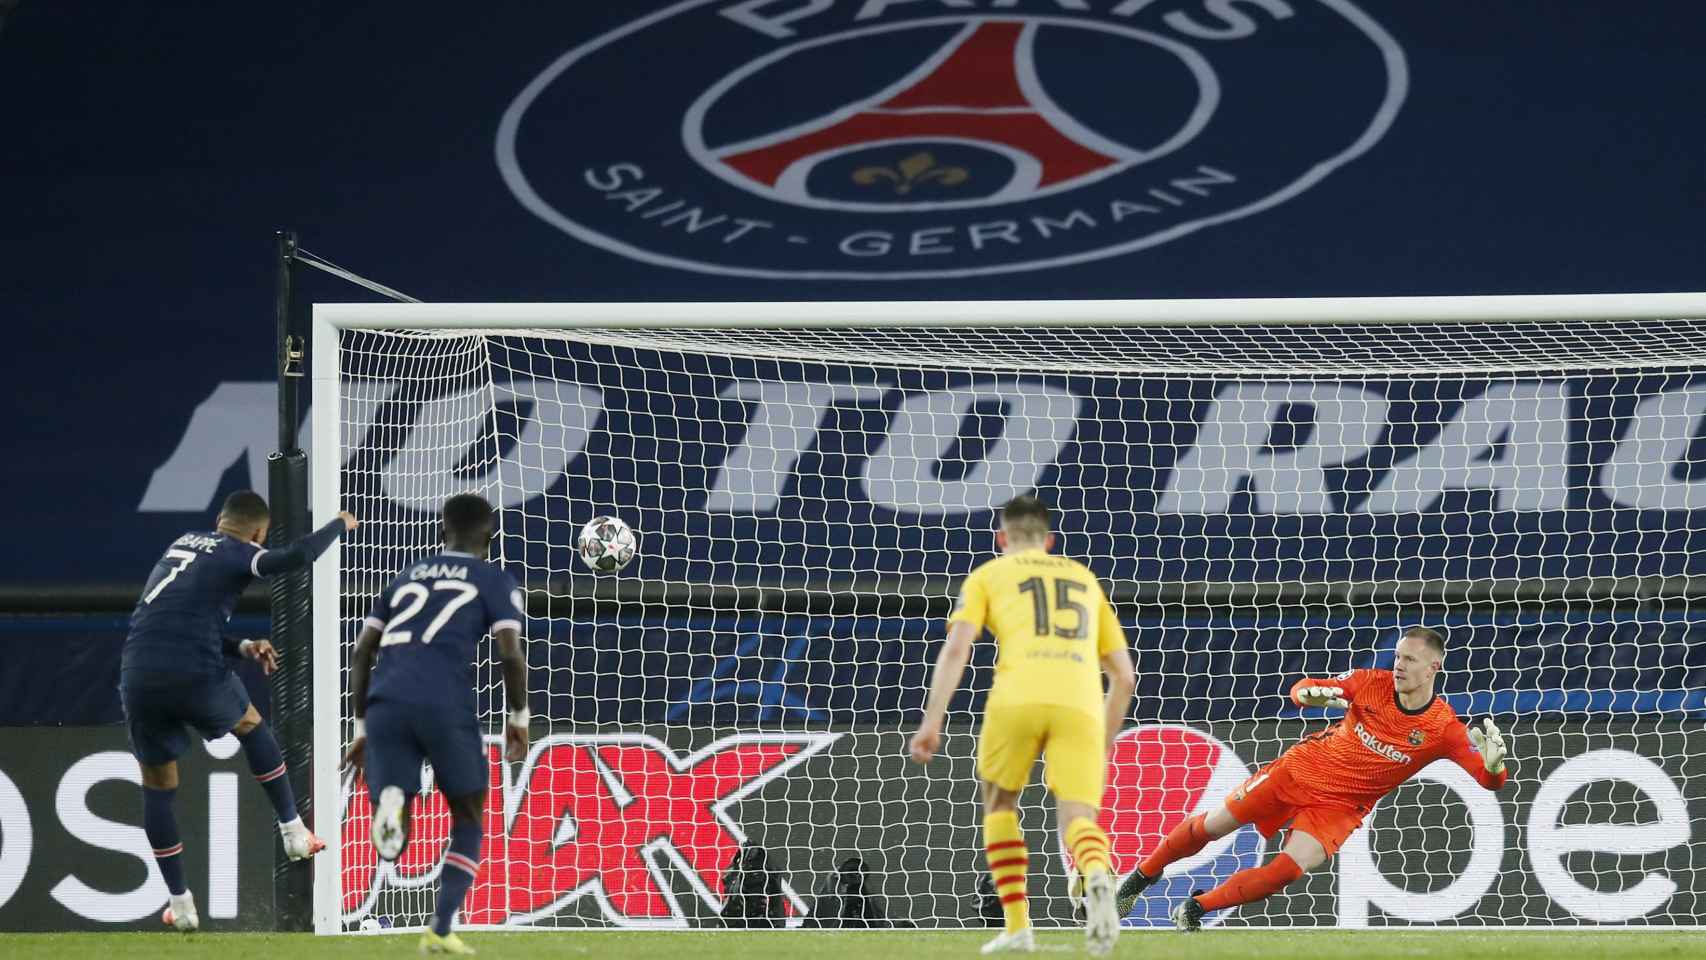 Kylian Mbappé ejecuta el lanzamiento de penalti ante Ter Stegen